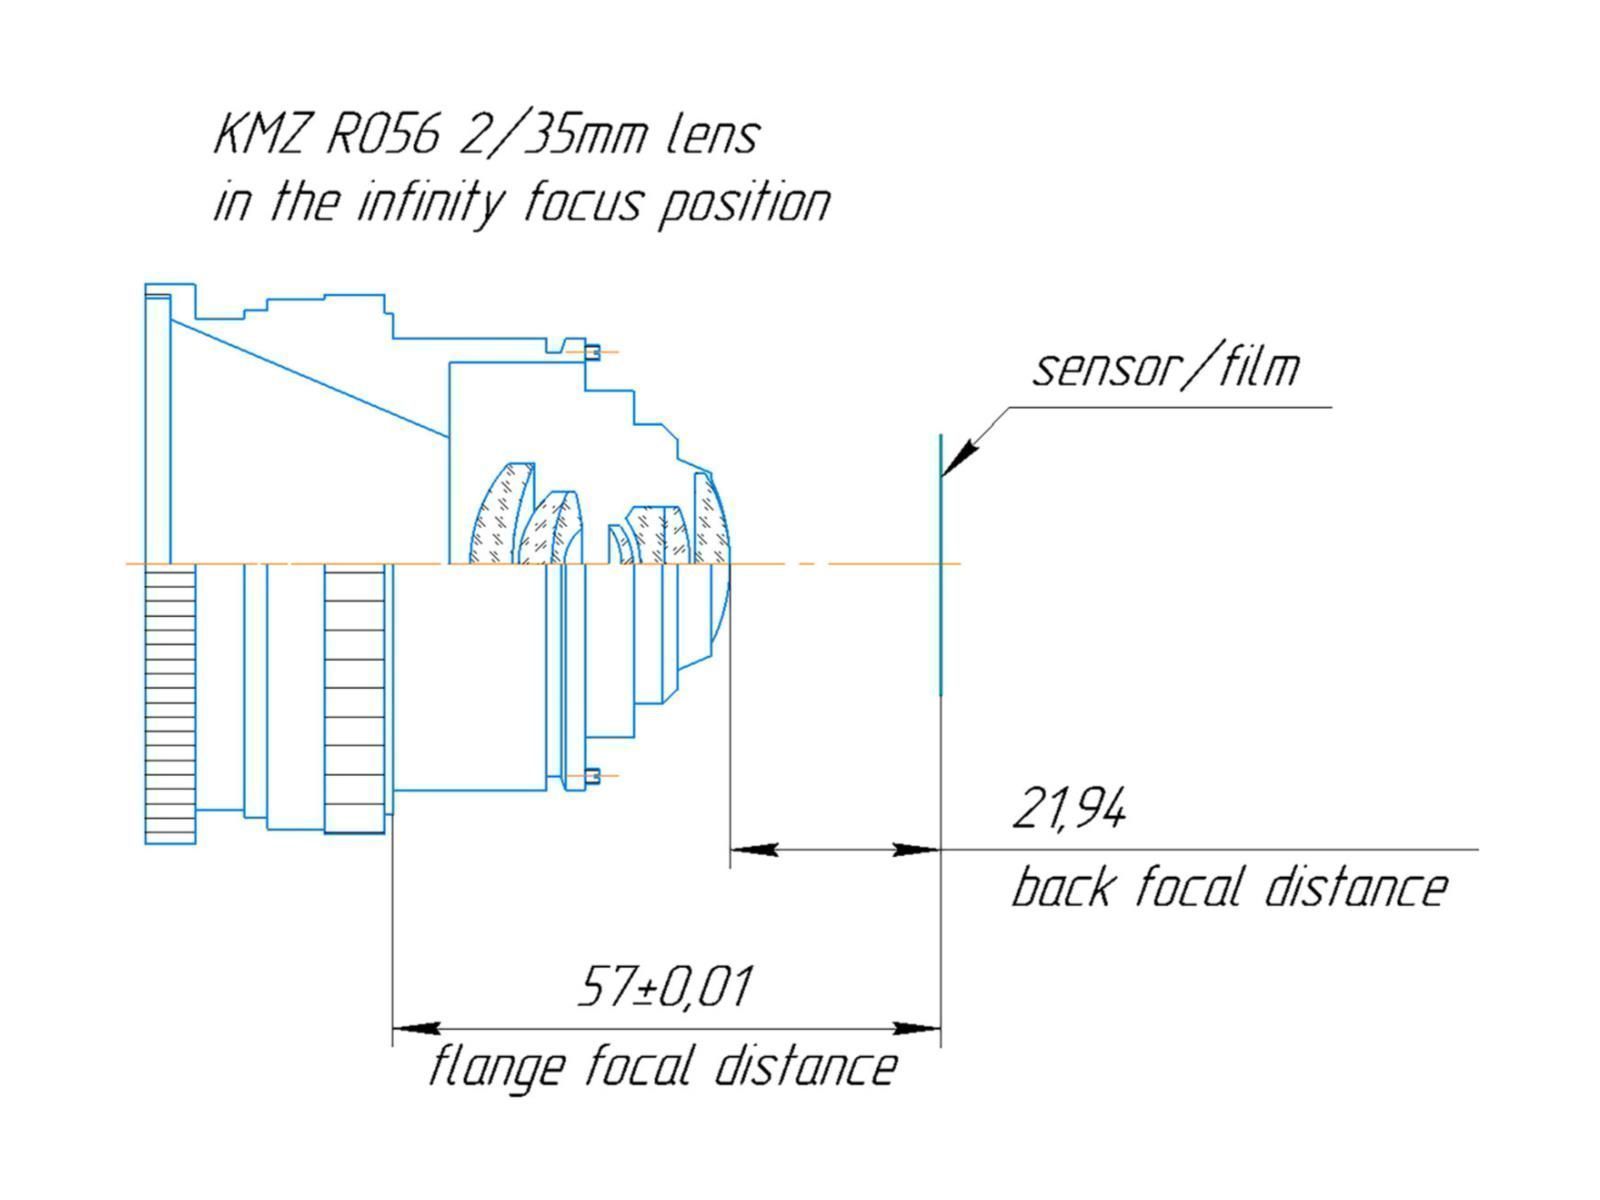 back focal distance illustrated